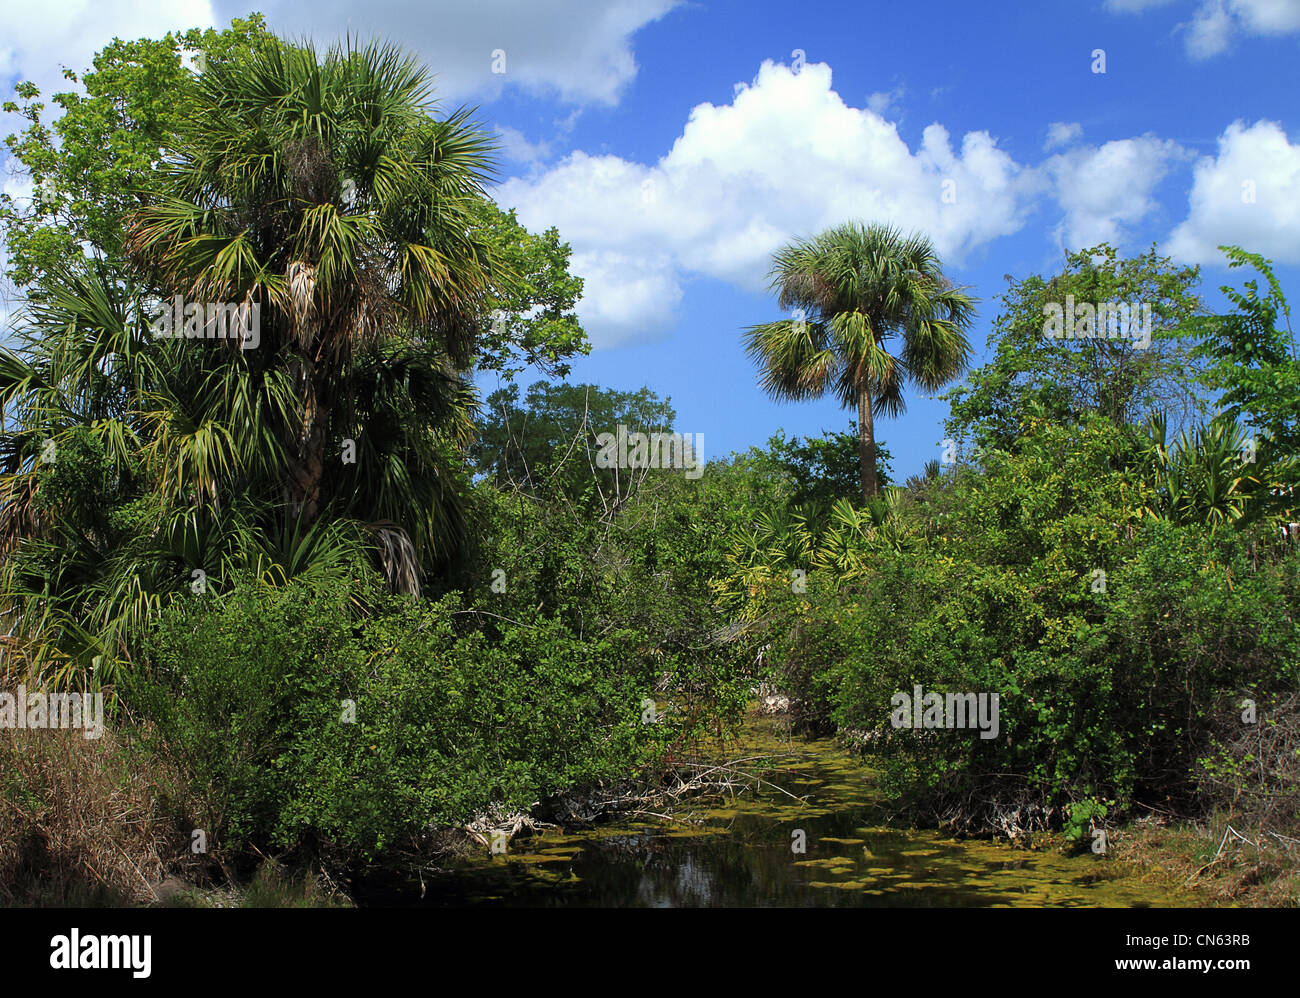 merritt island cape canaveral wildlife refuge pond palm tree shrub overgrowth florida Stock Photo